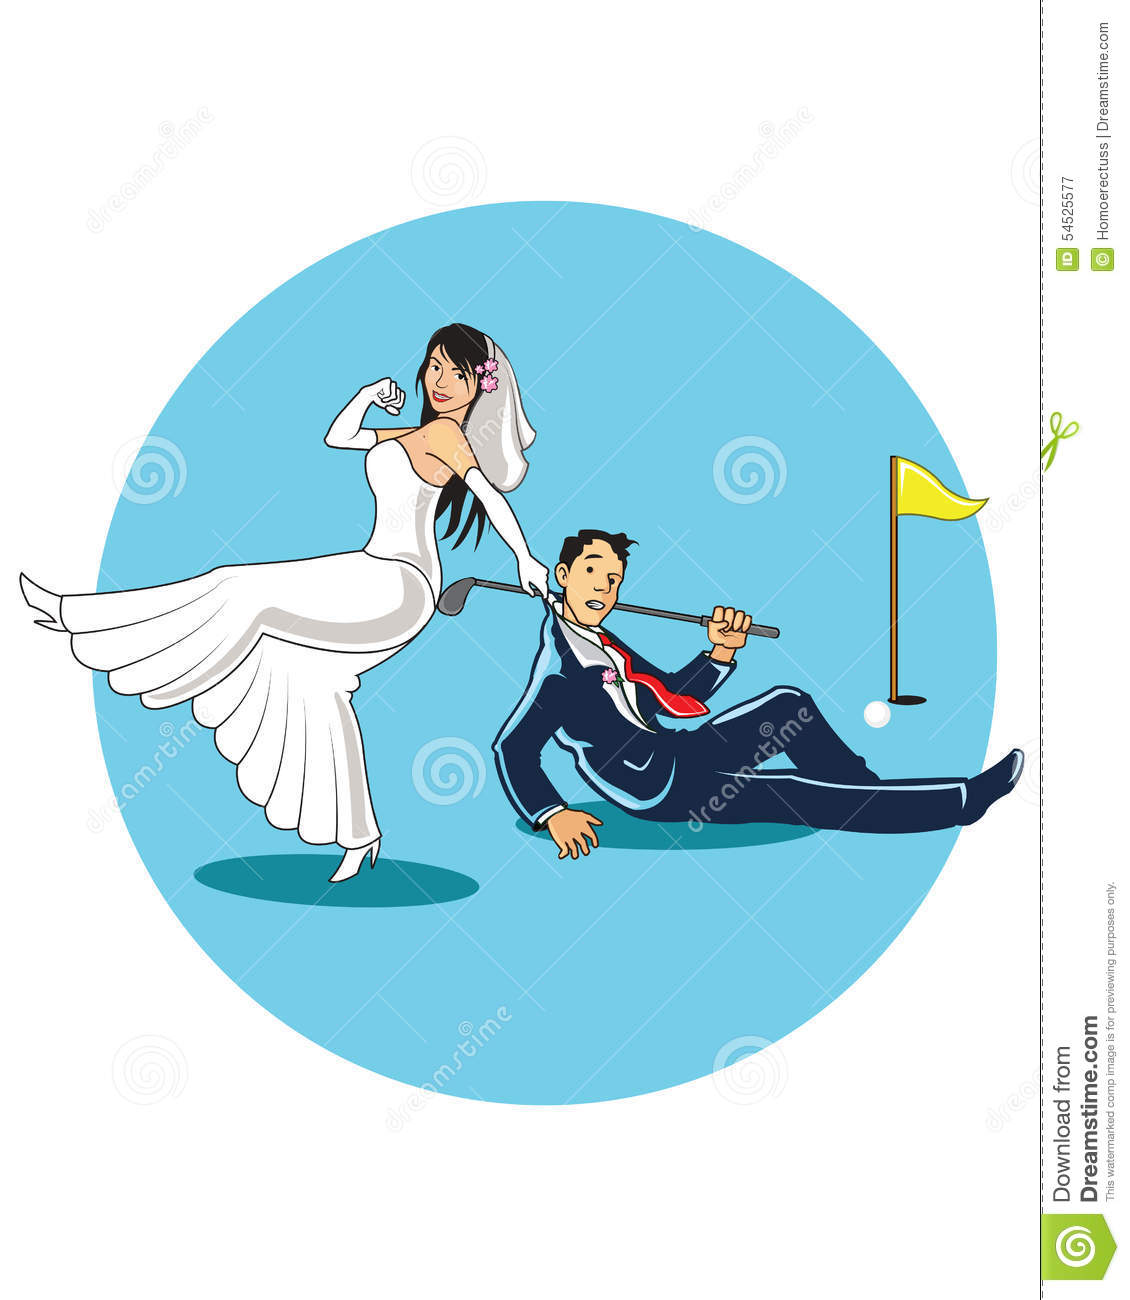     Cartoo Design Of Funny Bride Drag Her Golfer Broom In Golf Course